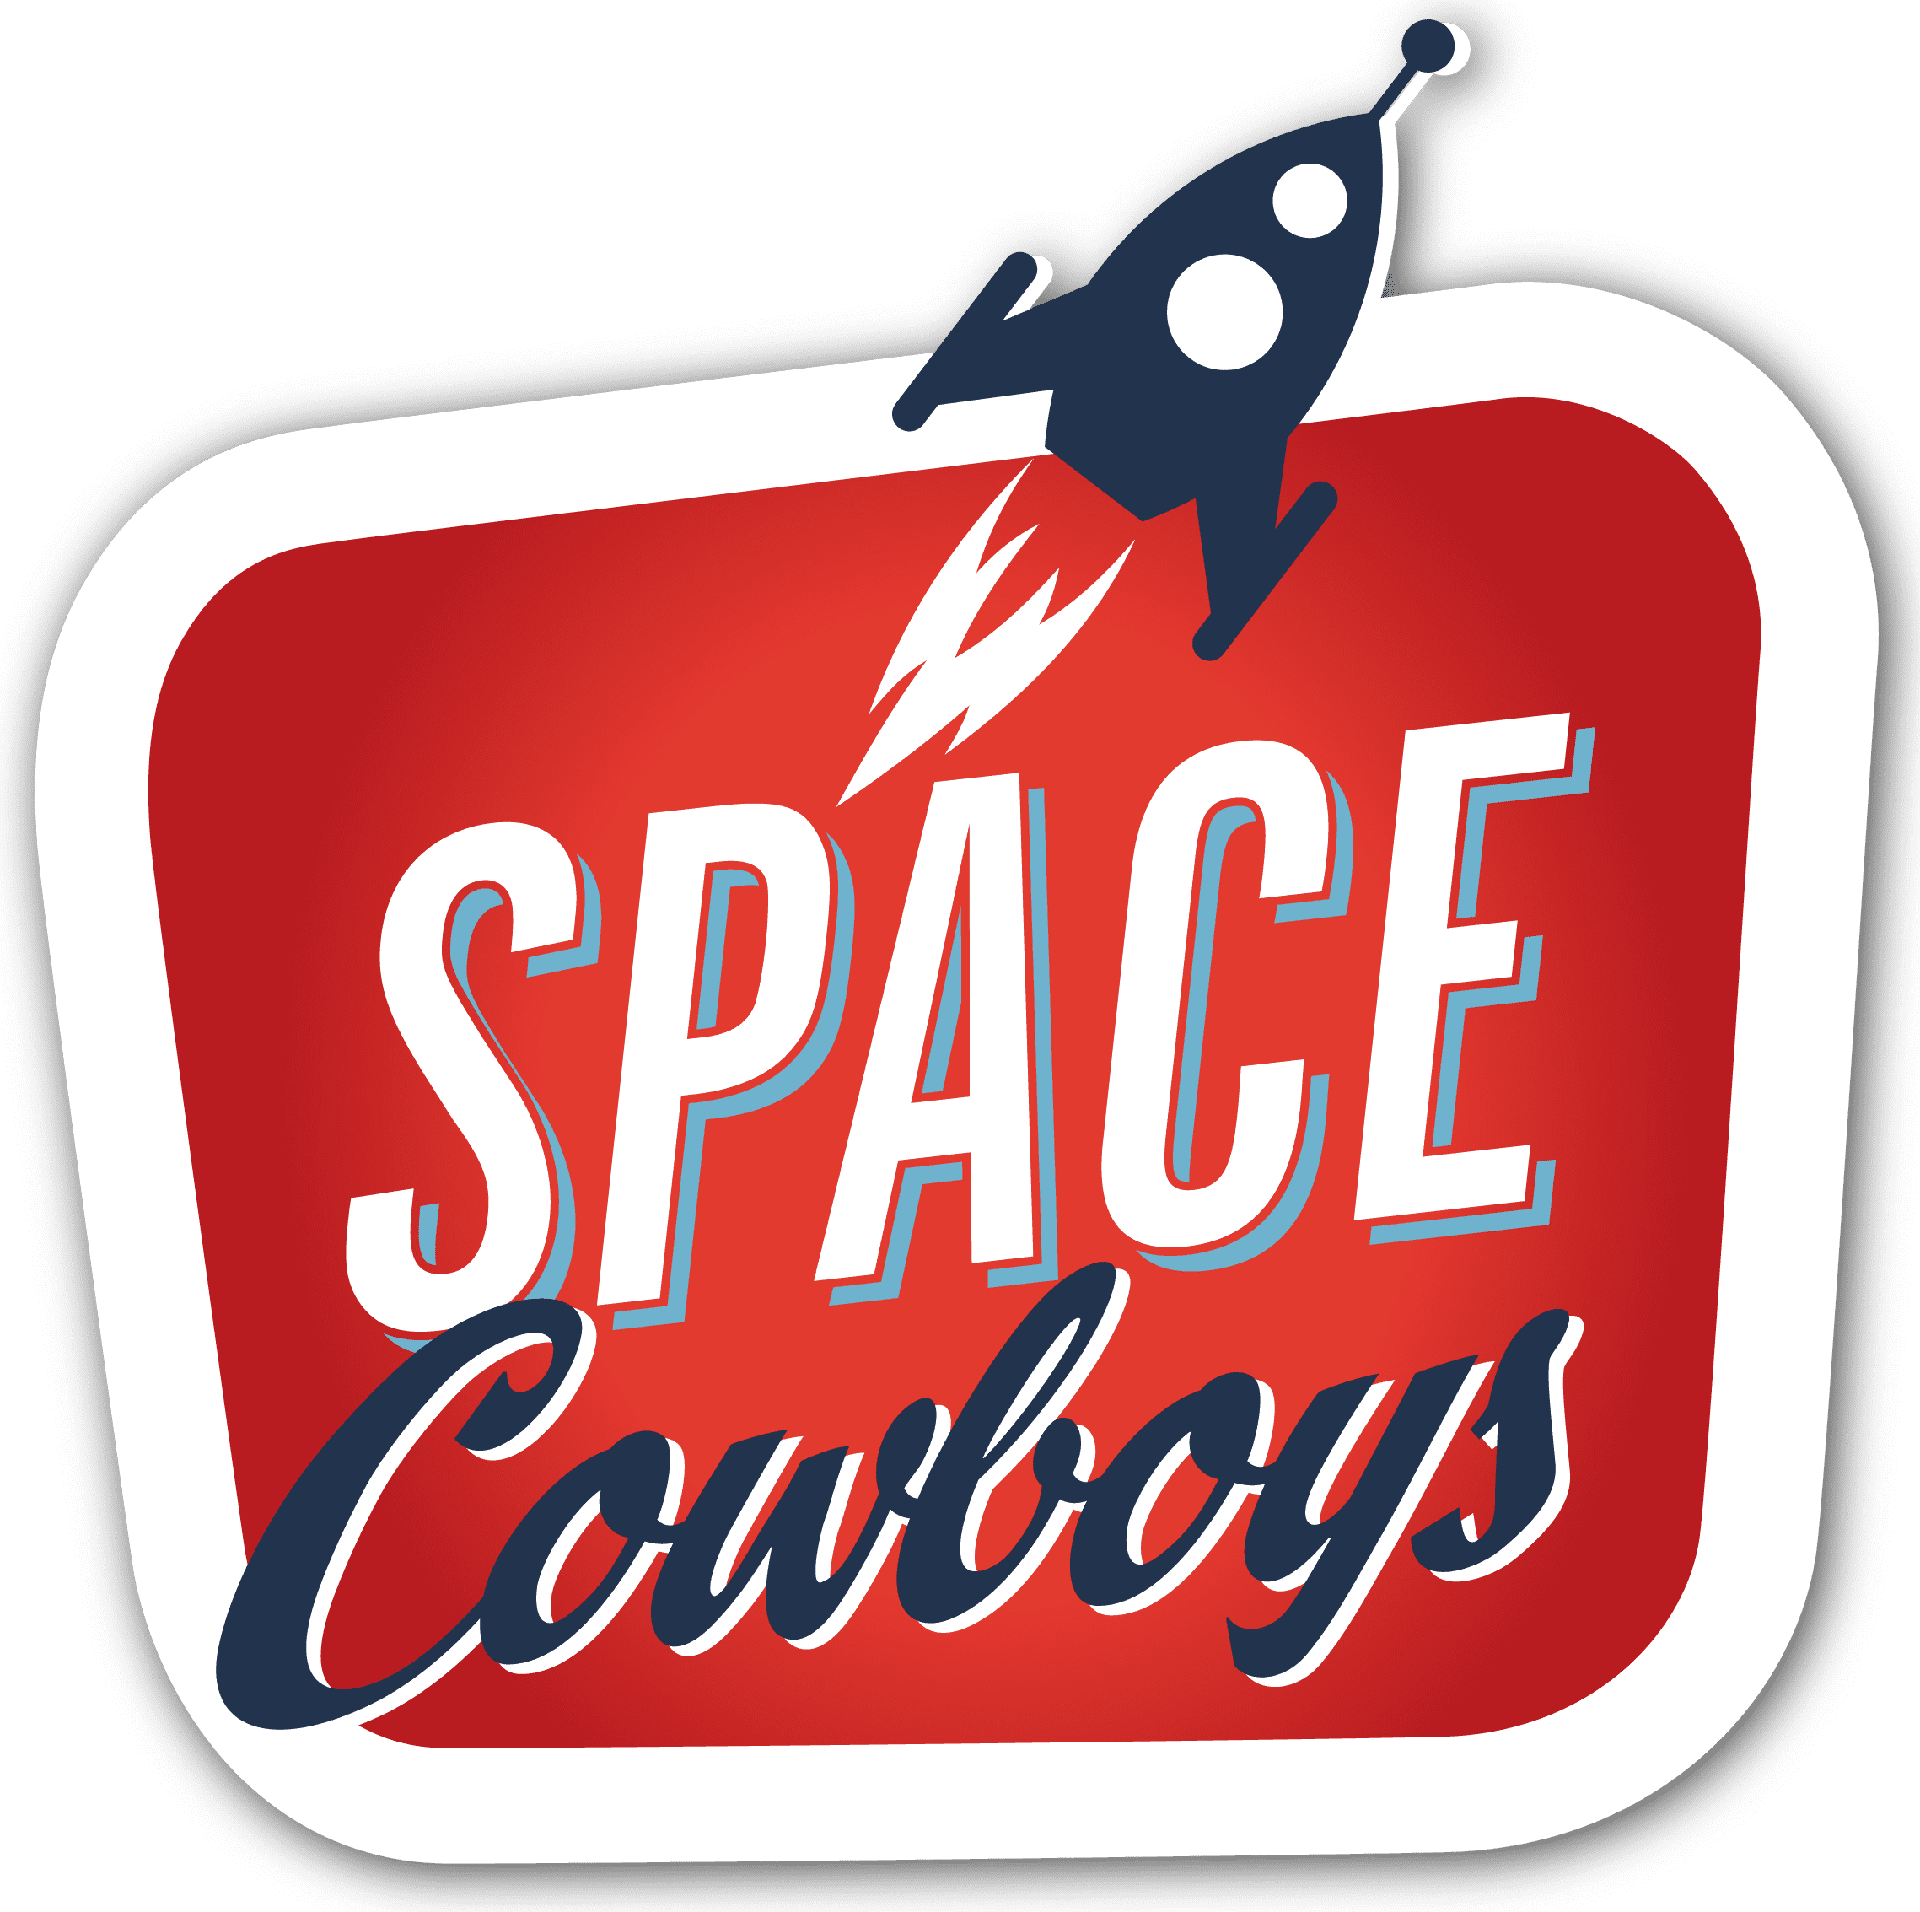 Brand: Space Cowboys